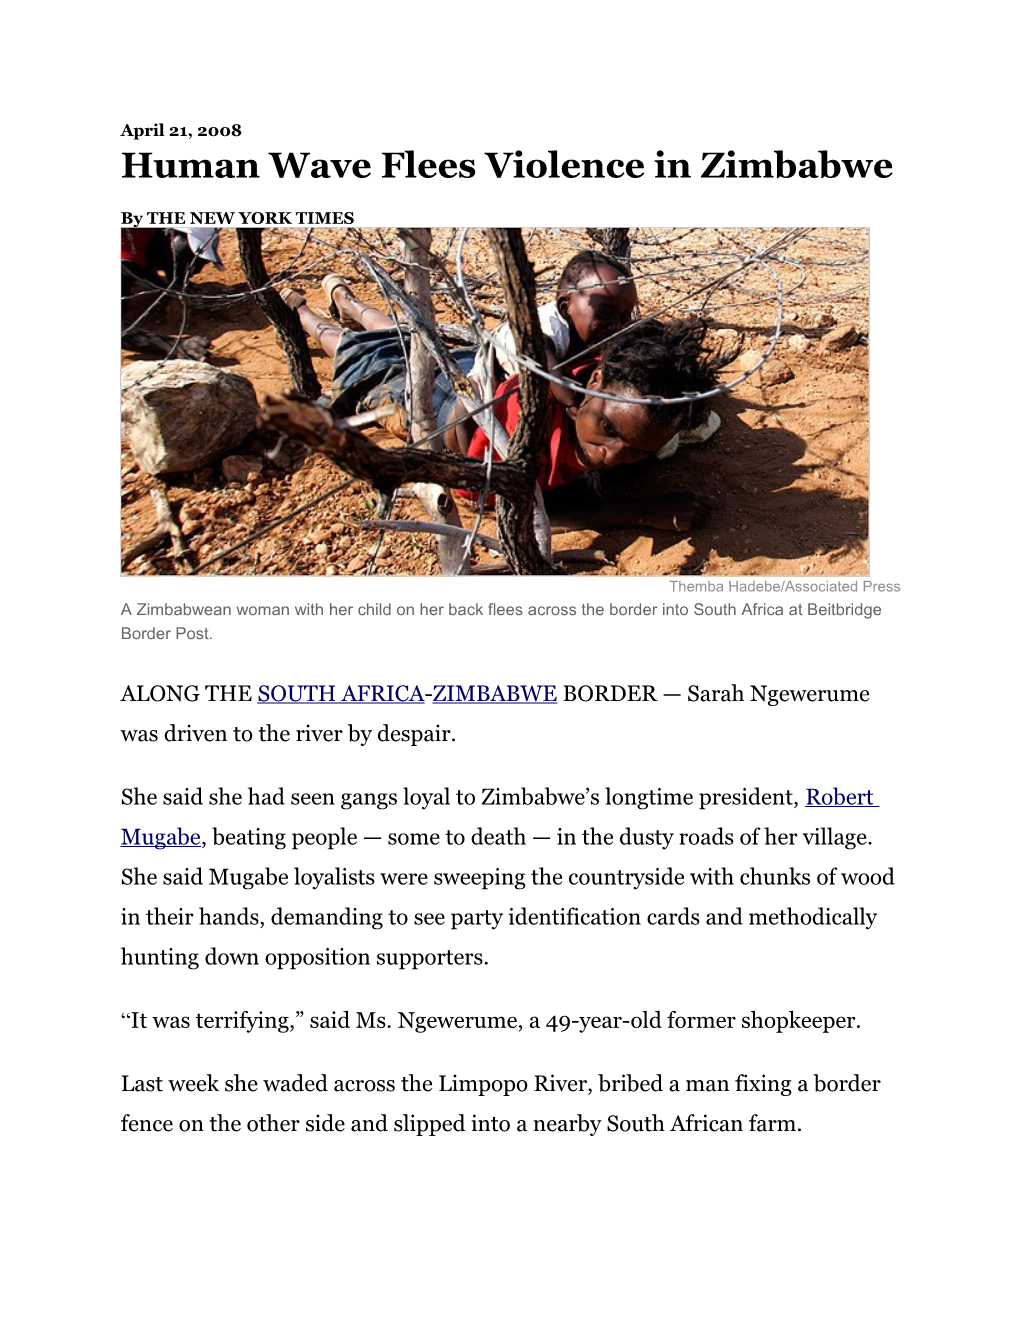 Human Wave Flees Violence in Zimbabwe